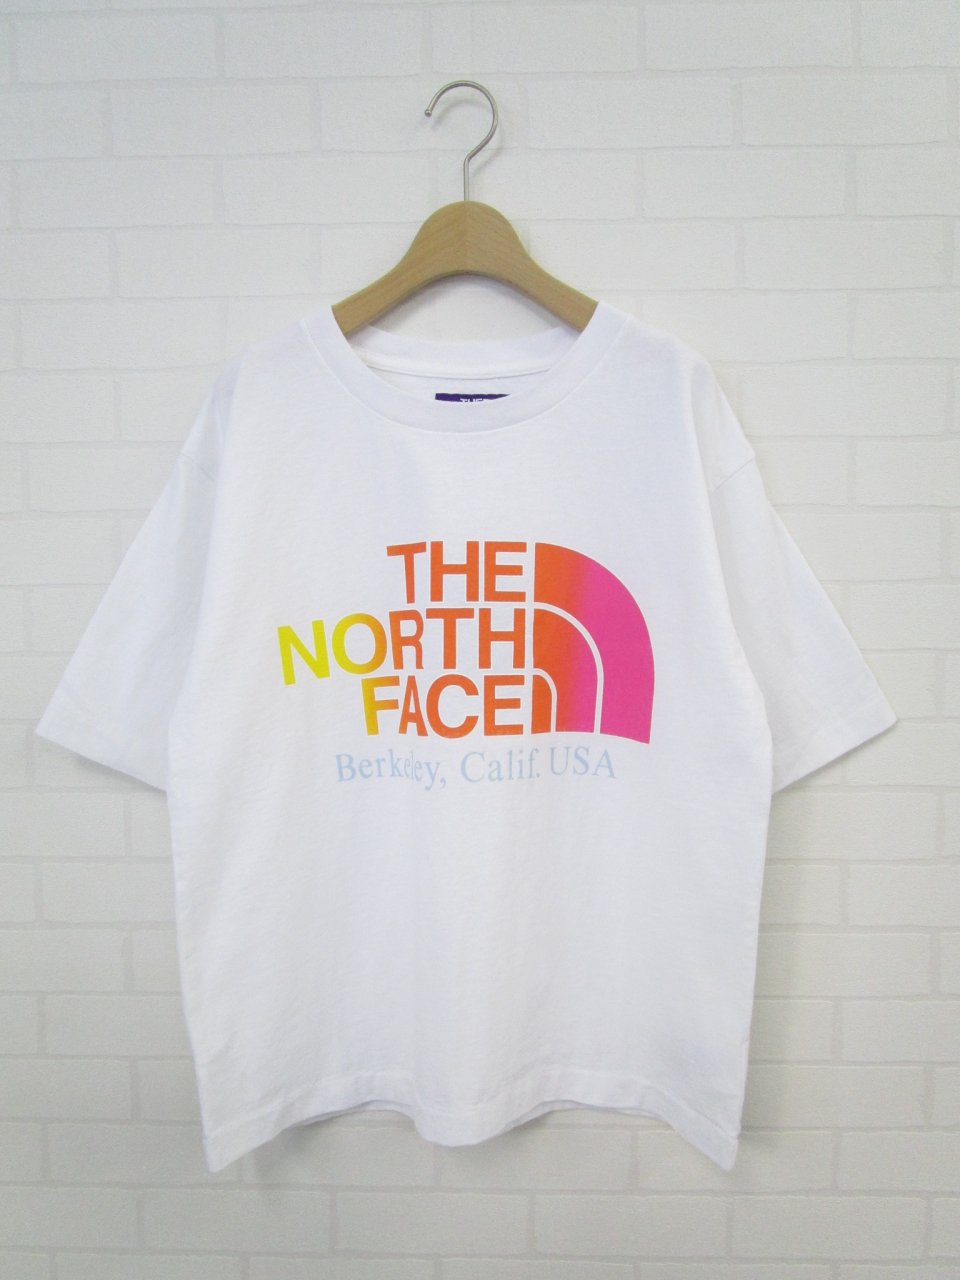 THE NORTH FACE - ロゴTシャツ - Sheth Online Store - シスオンライン